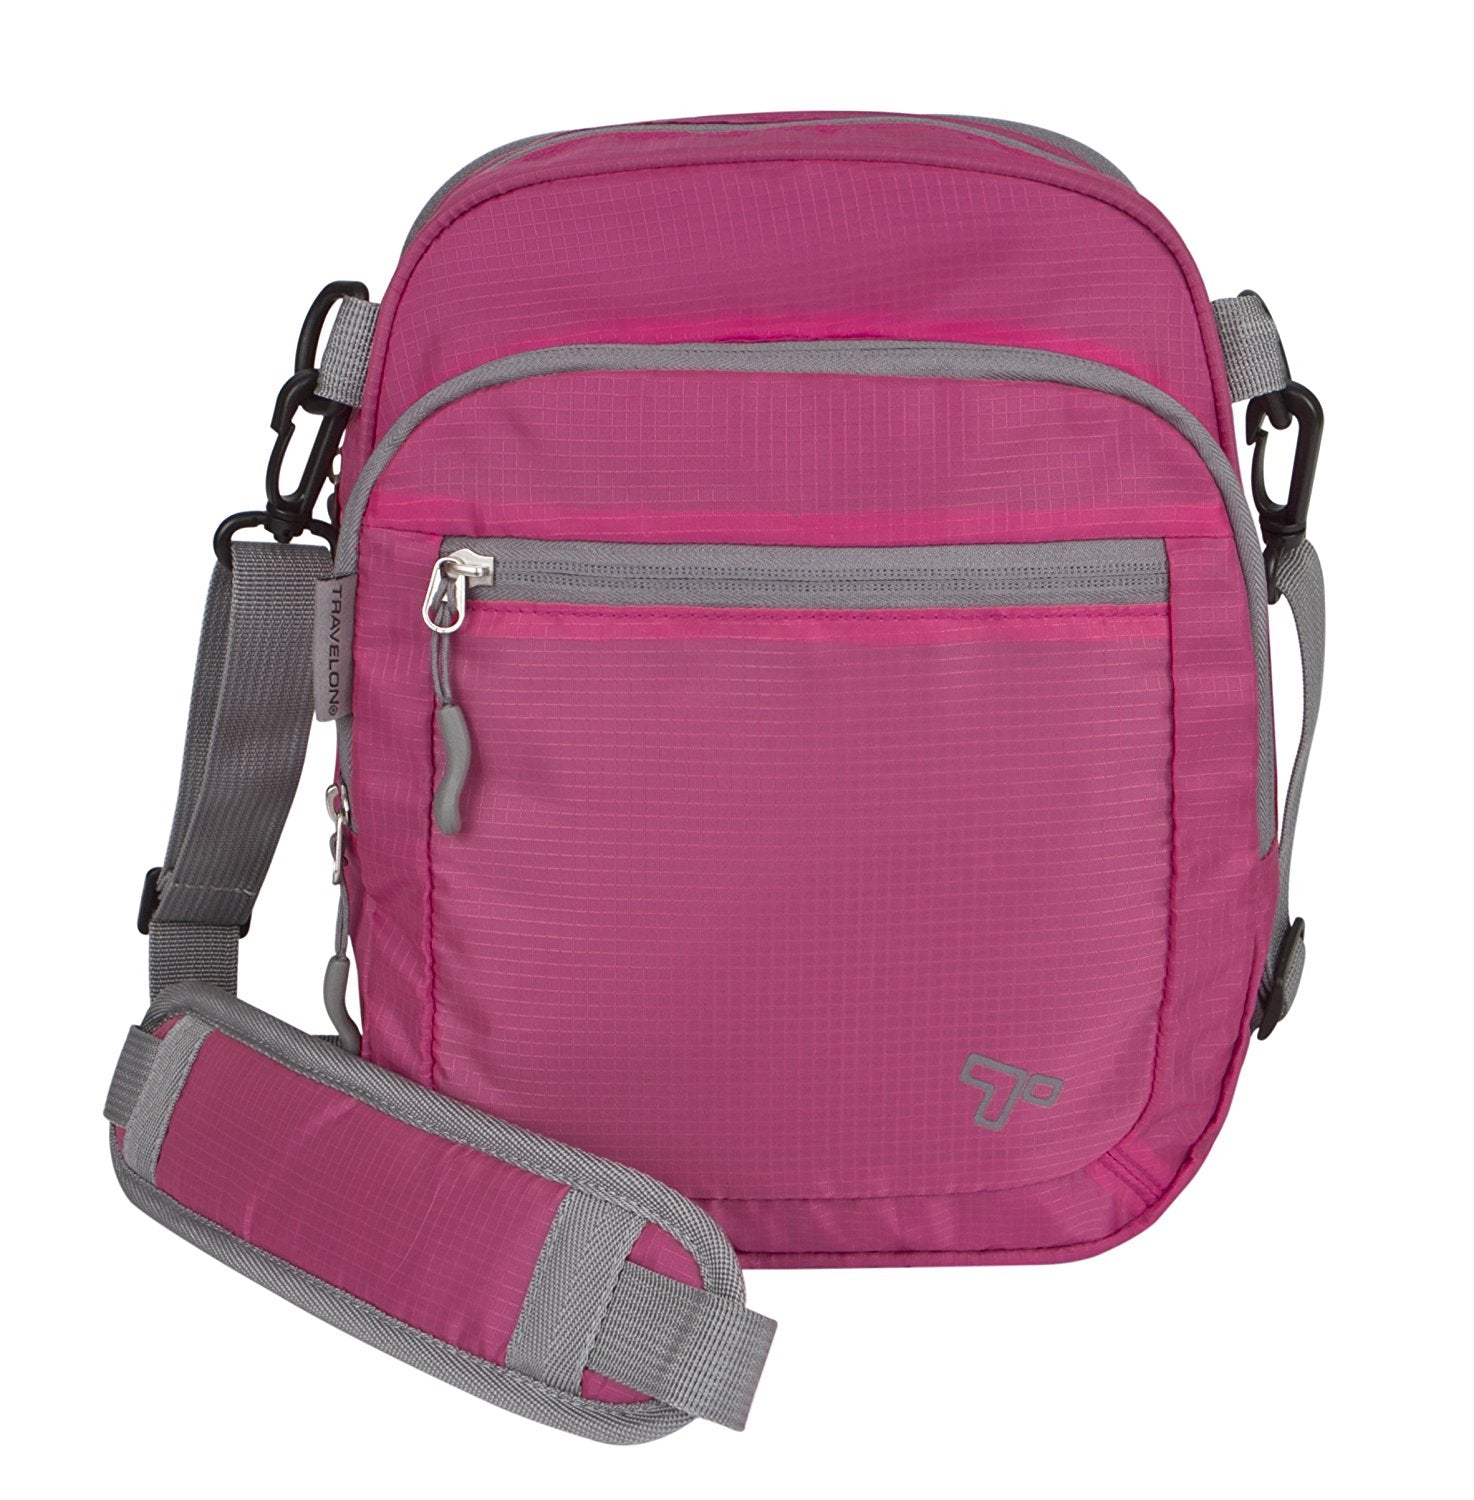 Travelon Compact Convertible Crossbody Duffel Bag with Strap Berry - Travel Trek Luggage ...